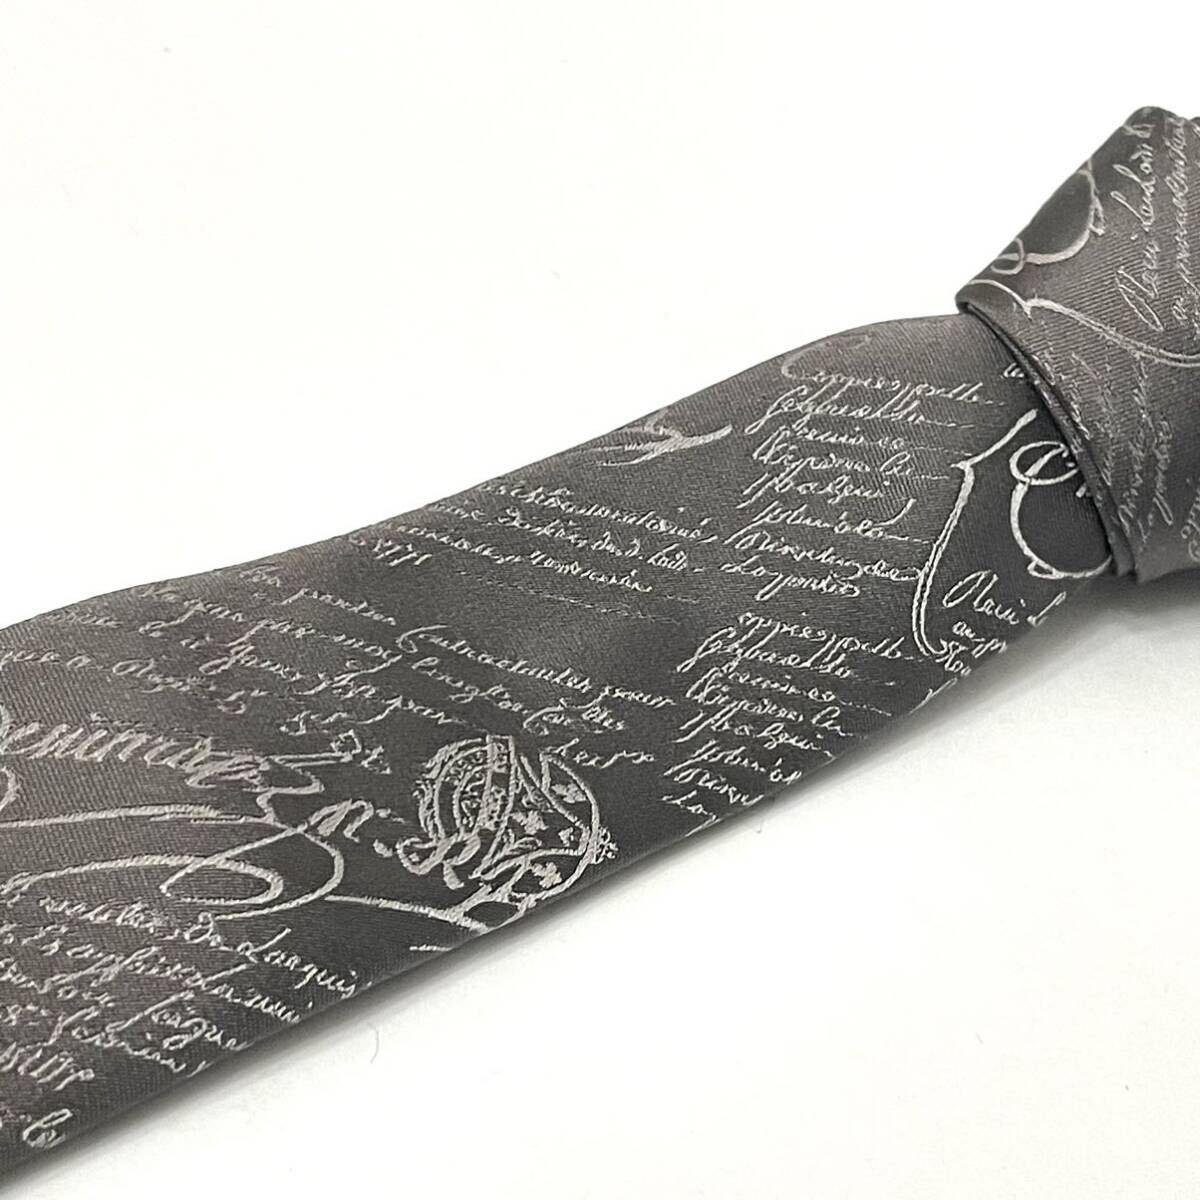  хорошая вещь Berluti Berluti kali graph . галстук klavato общий рисунок серый бизнес бренд галстук стандартный товар 